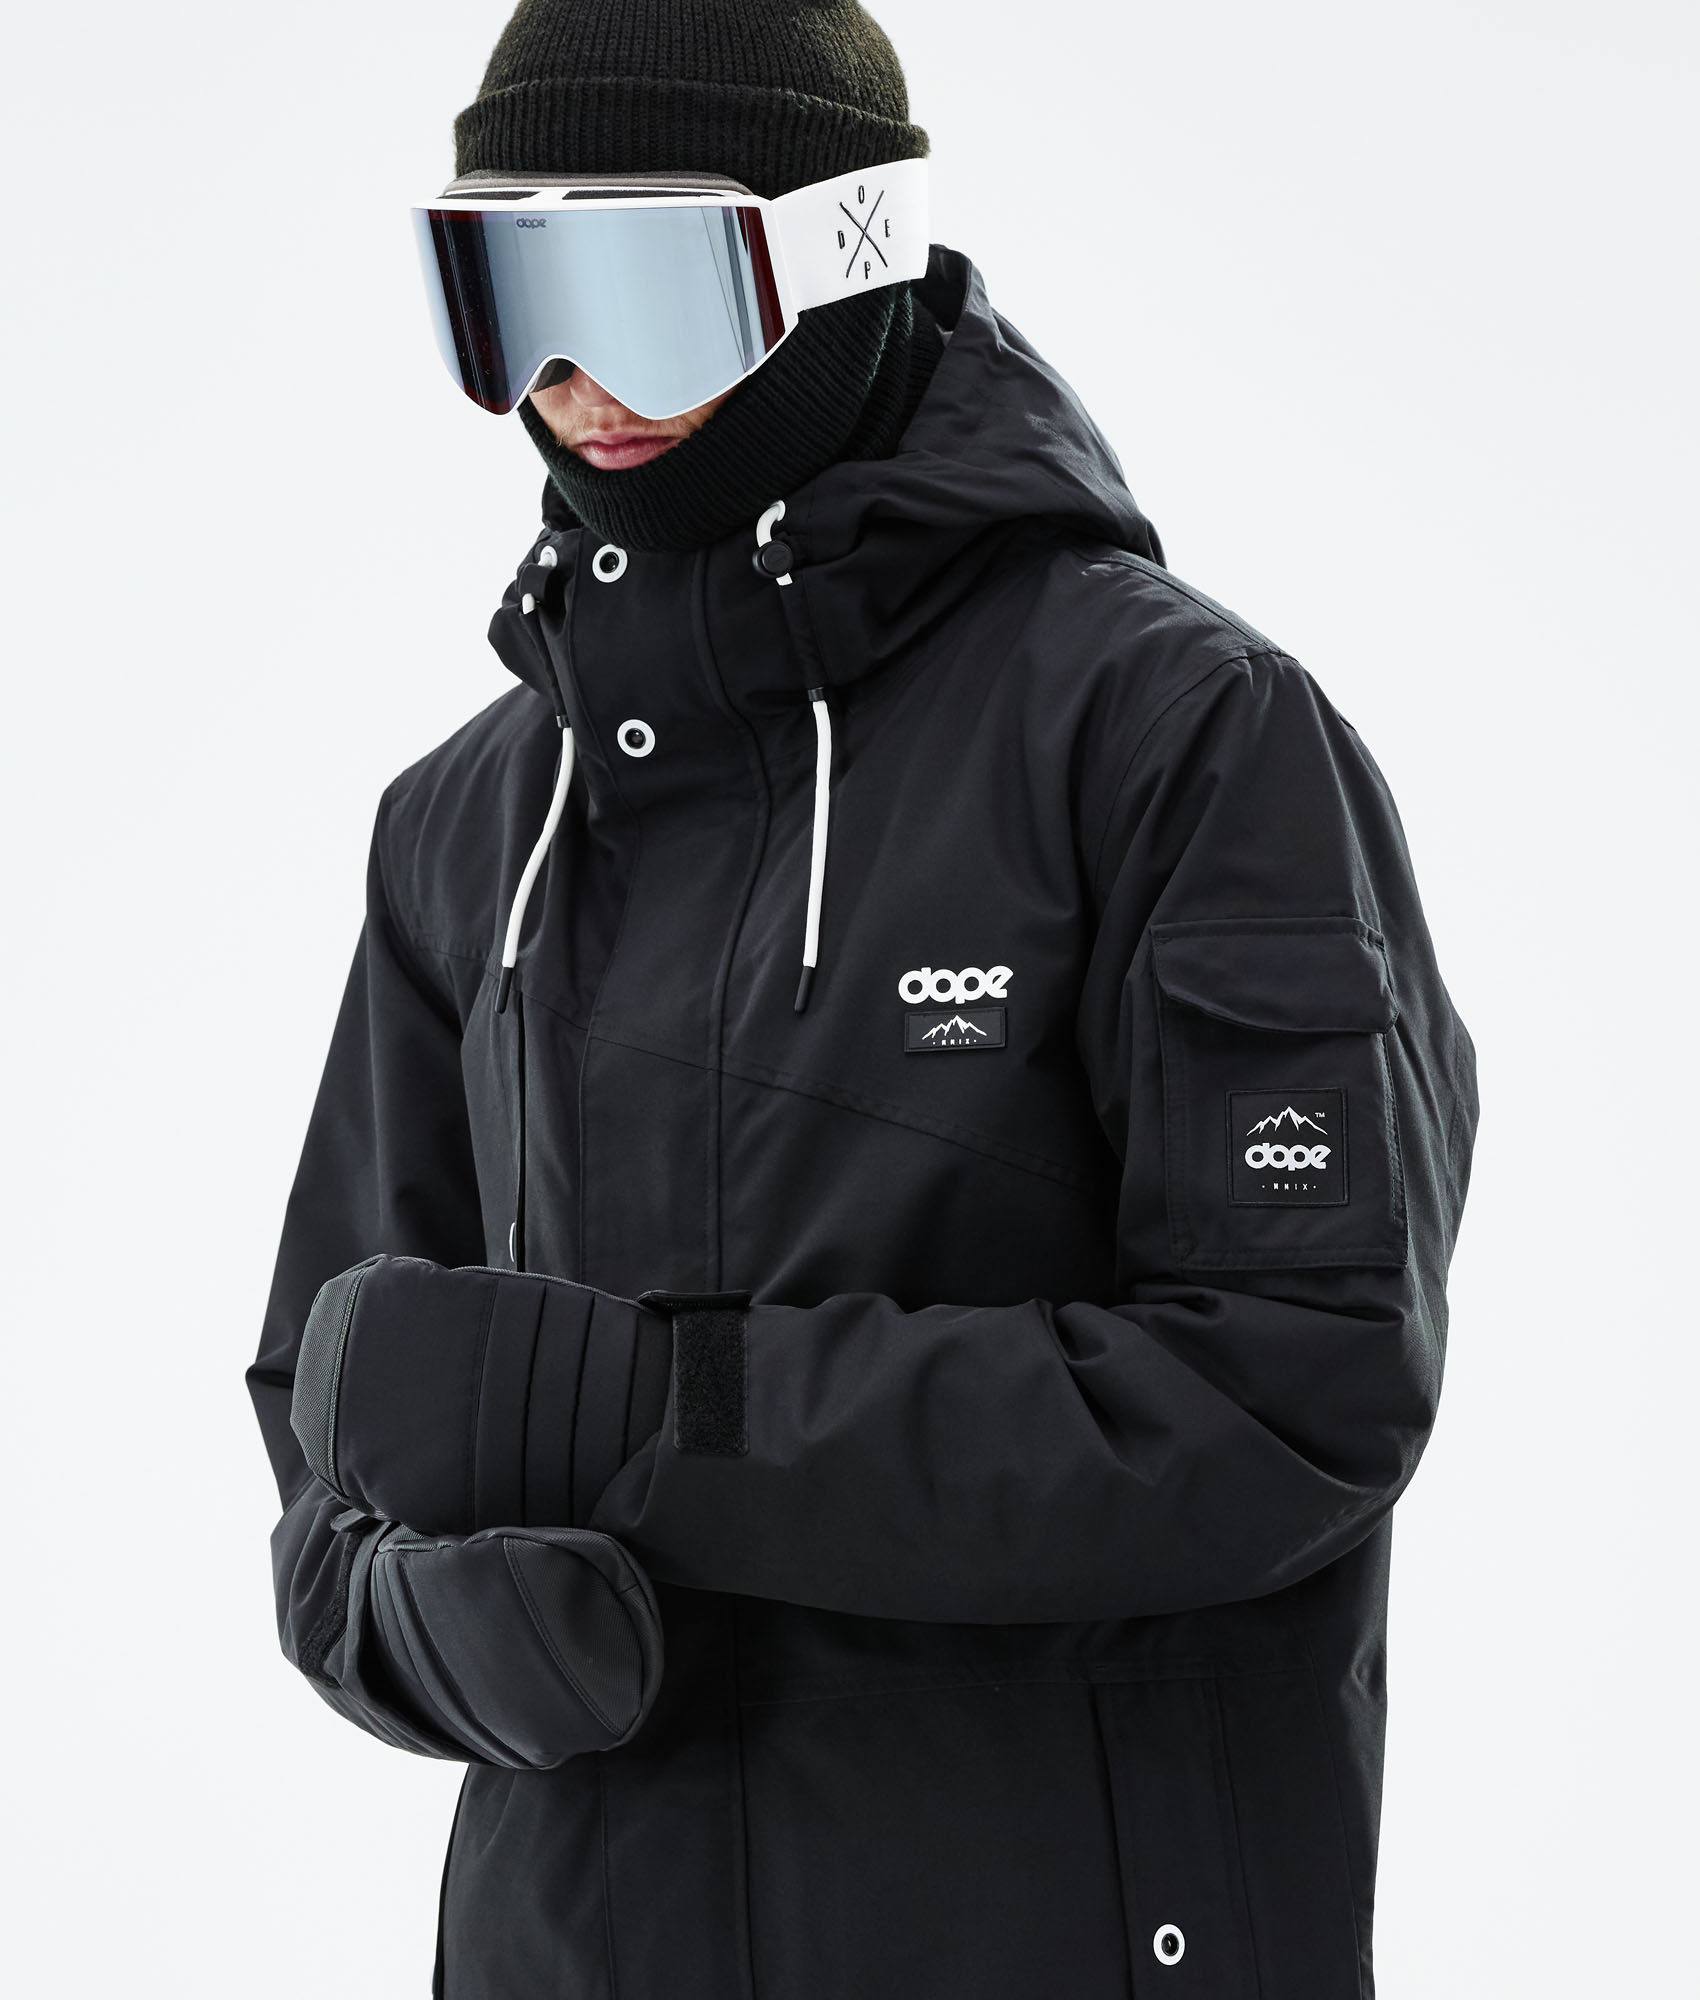 Dope Adept 2019 Snowboardjacka Black | Ridestore.se